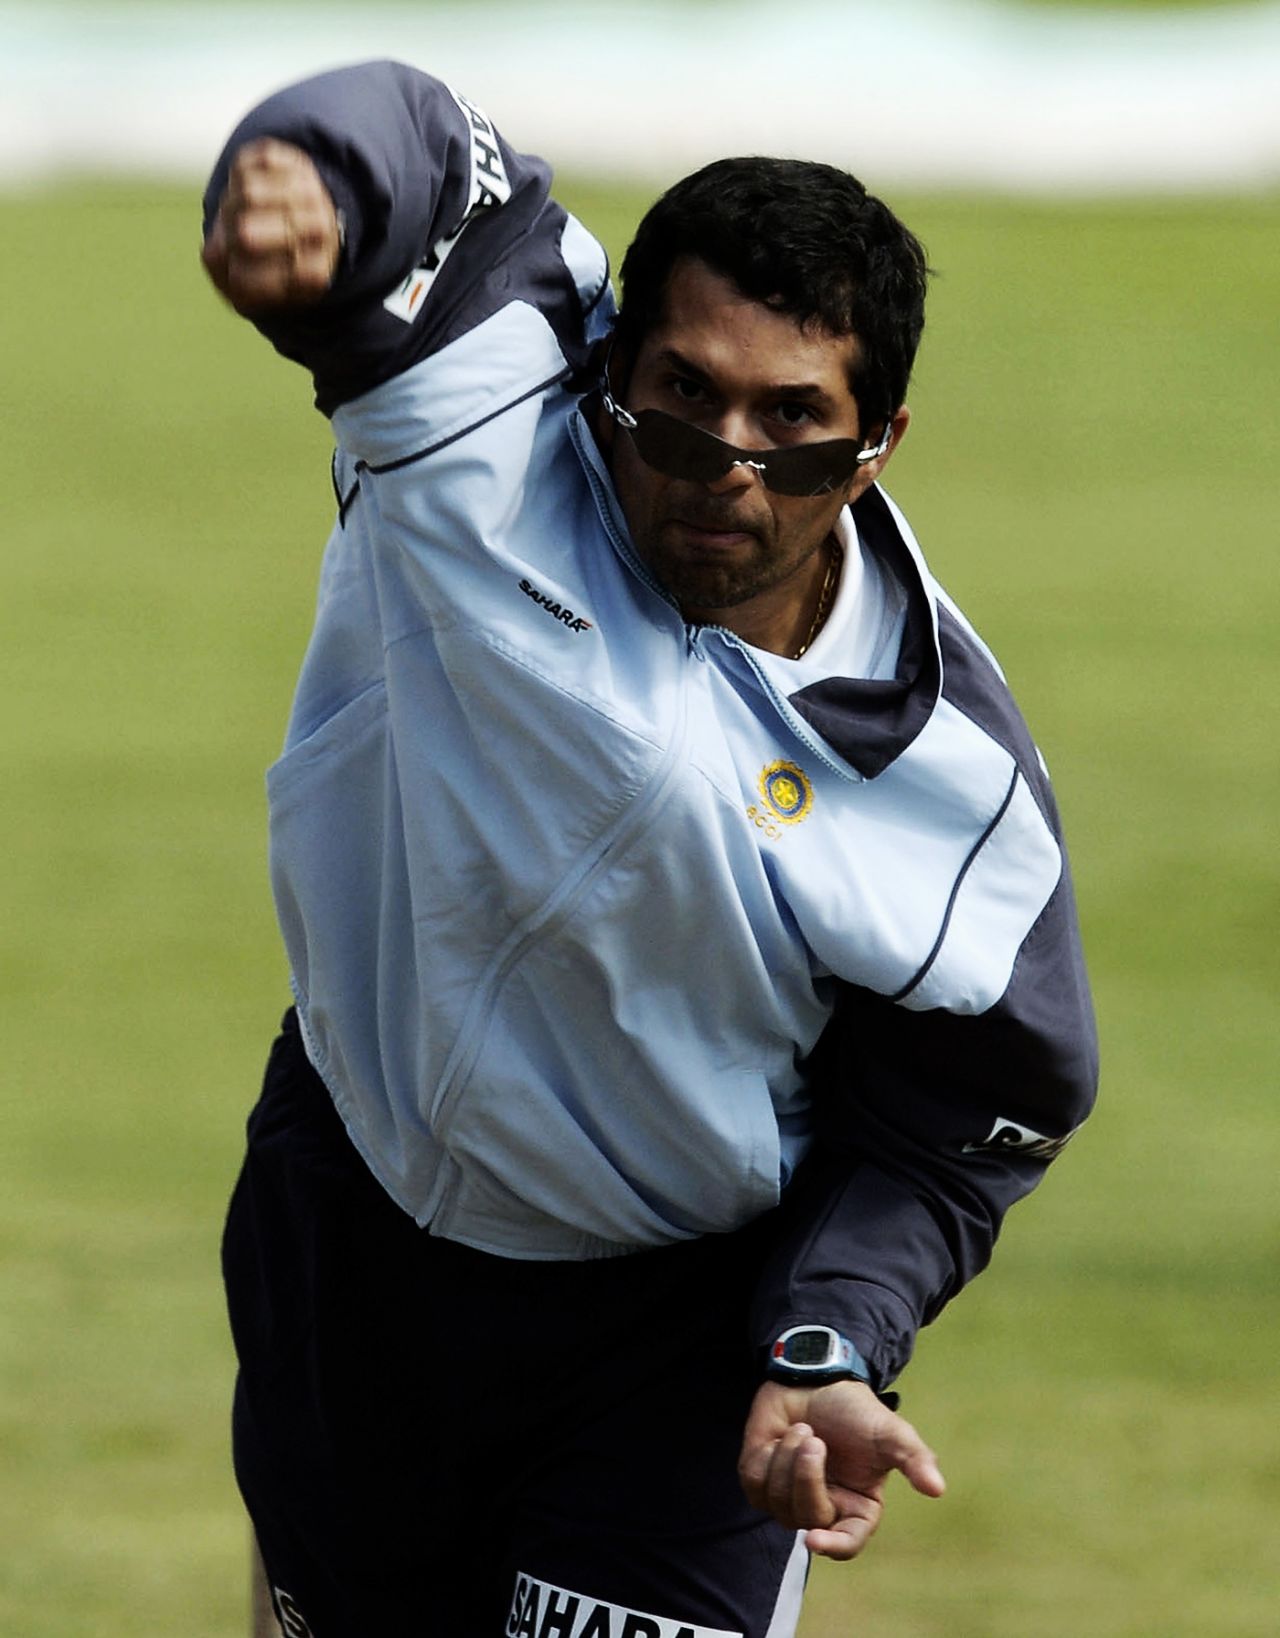 Sachin Tendulkar's sunglasses slip down while he bowls, Trent Bridge, August 31, 2004